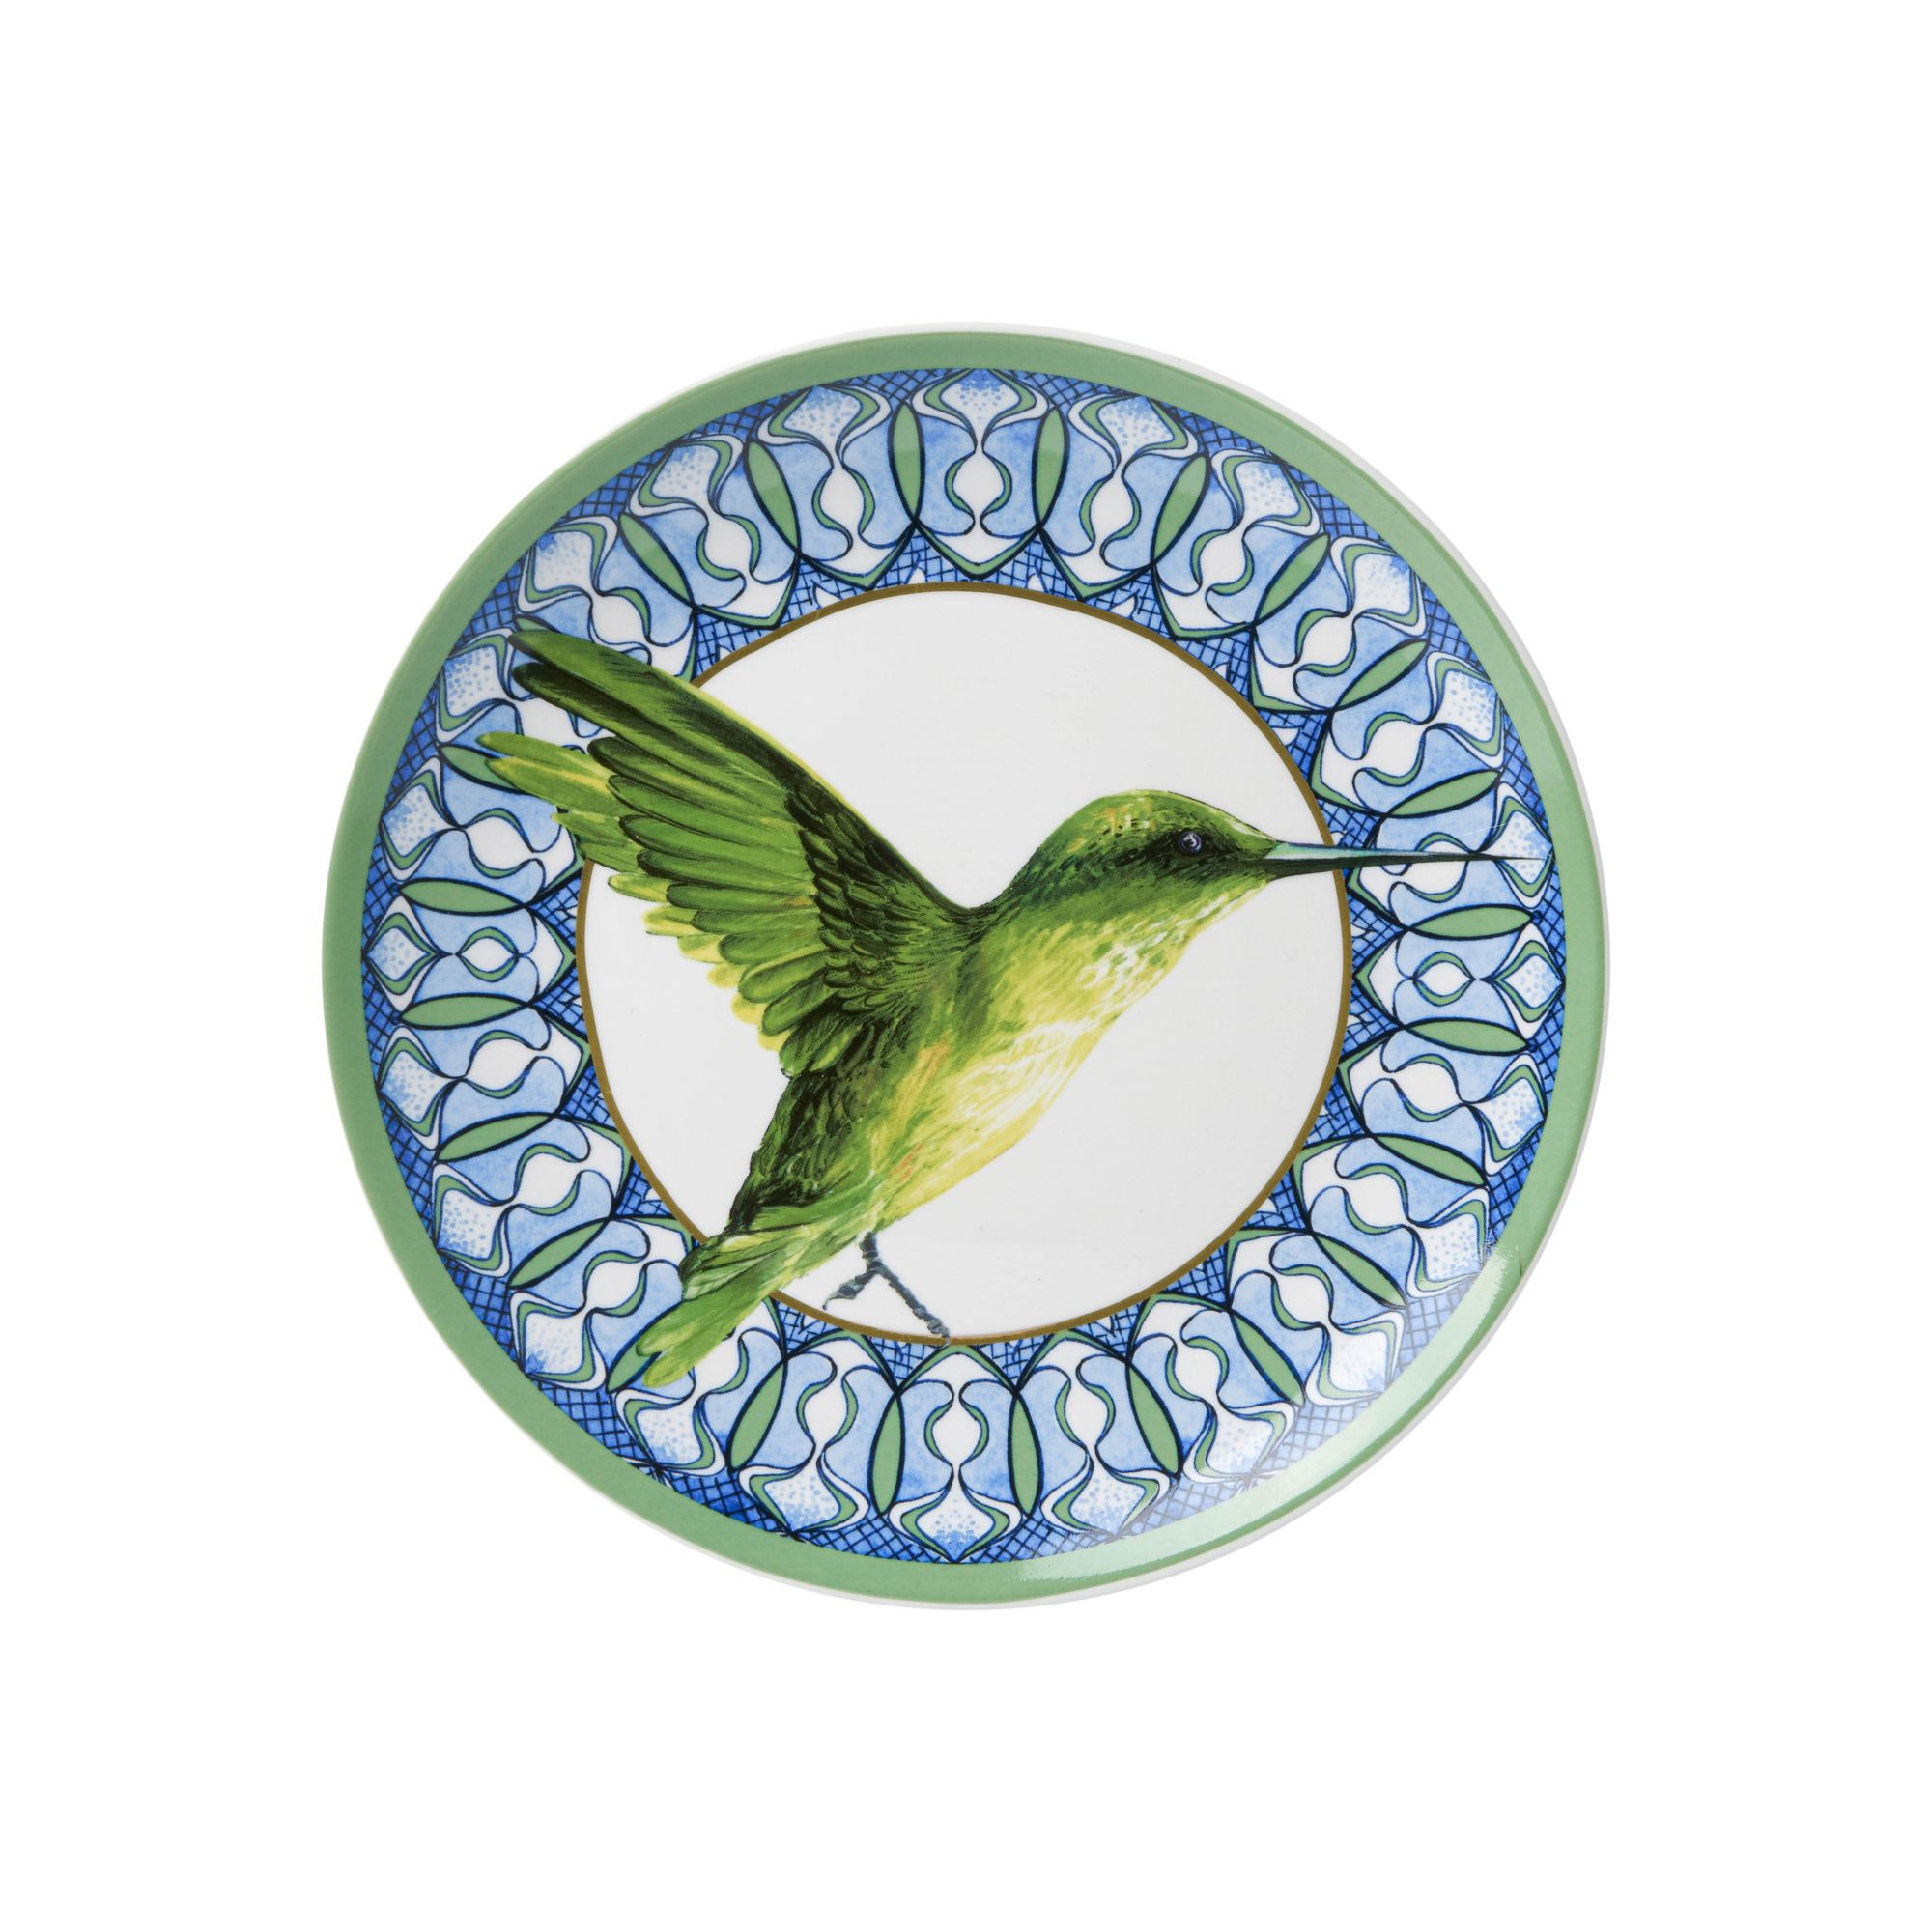 Snikken verrassing verdamping Wandbord Mandala kolibrie kopen? » Heinen Delfts Blauw